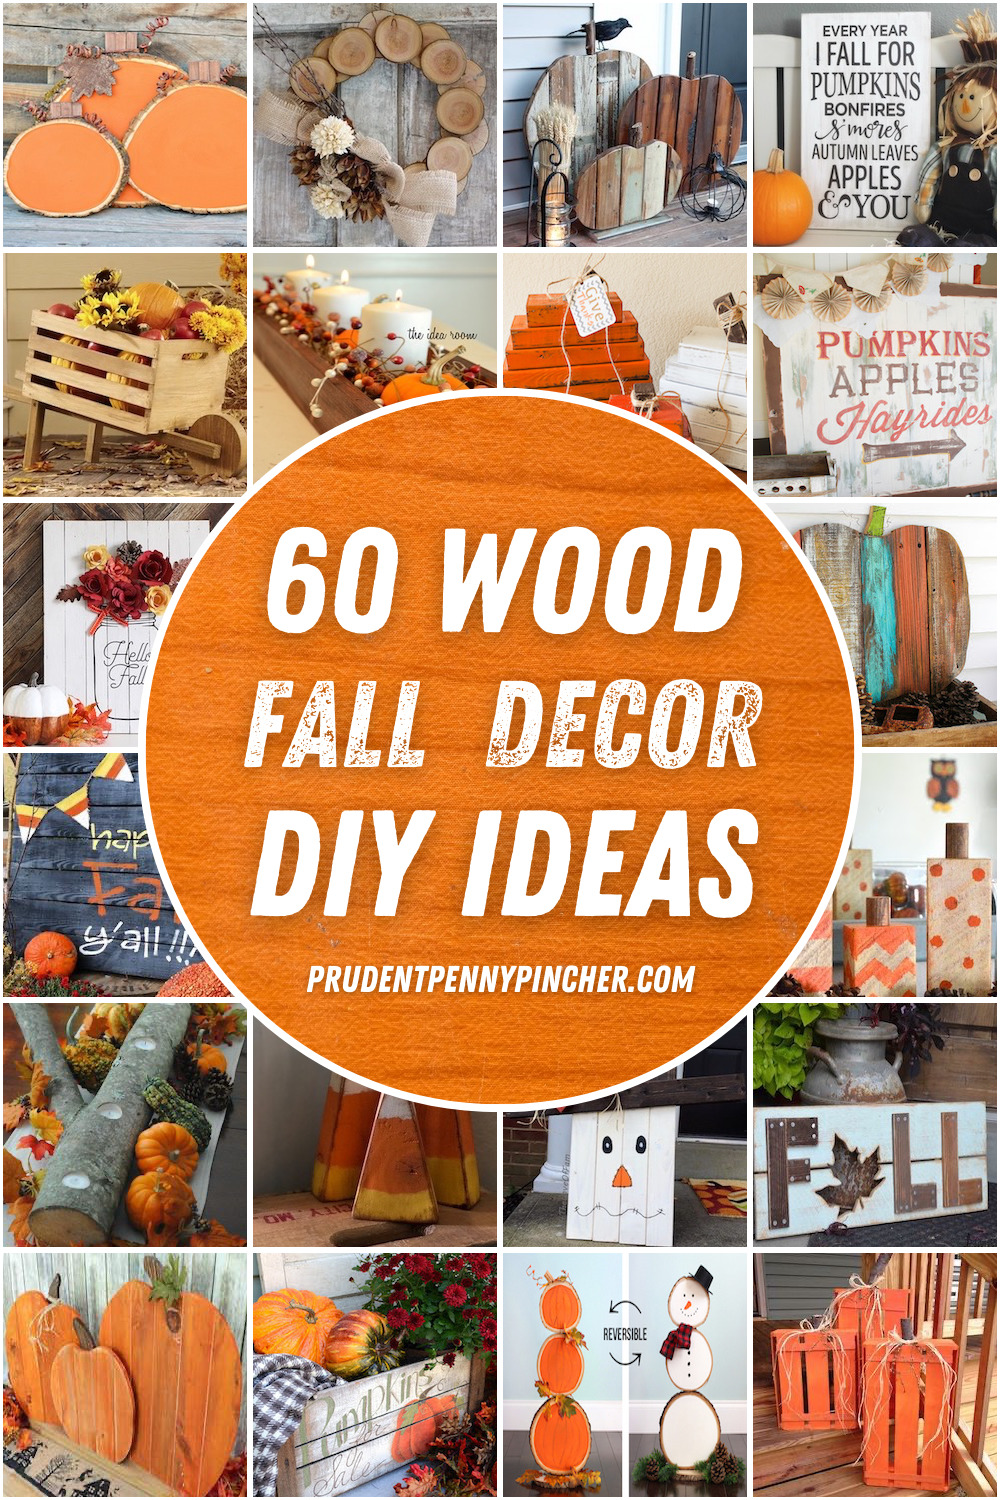 60 Wood DIY Fall Decor Ideas - Prudent Penny Pincher